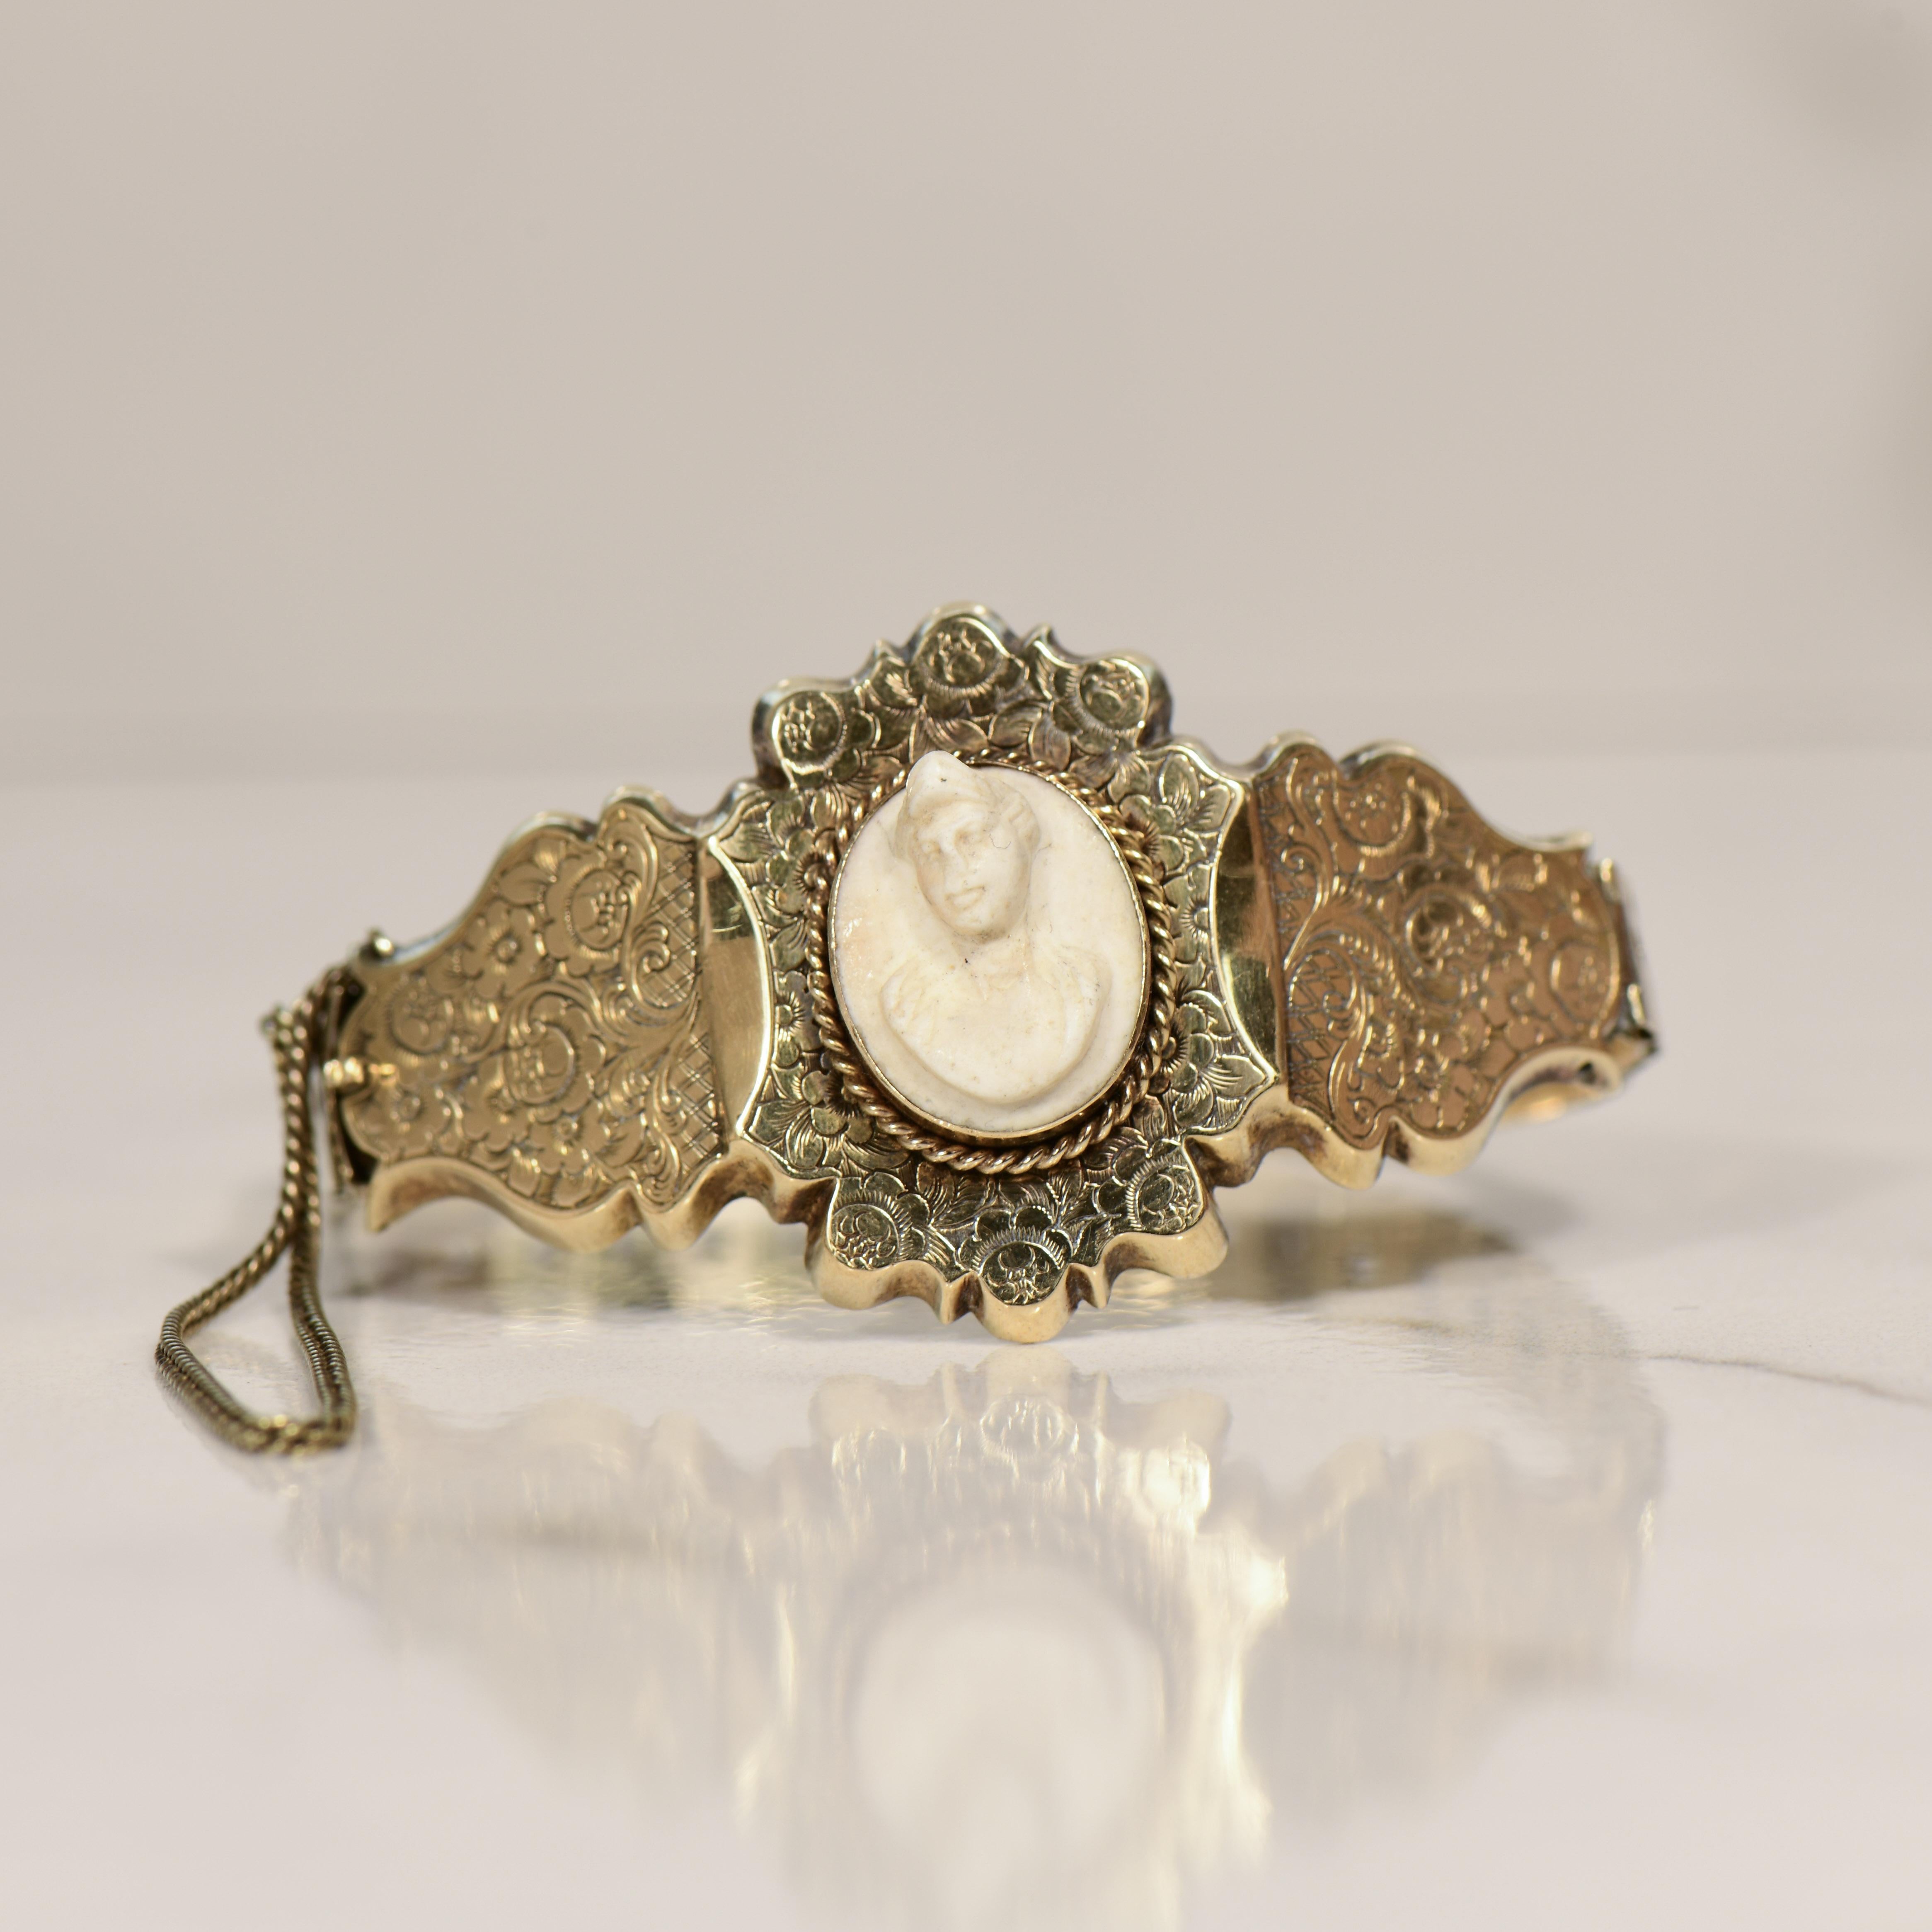 Antique Victorian Cameo Bracelet with Ornate Floral Engraving 14K Gold 6